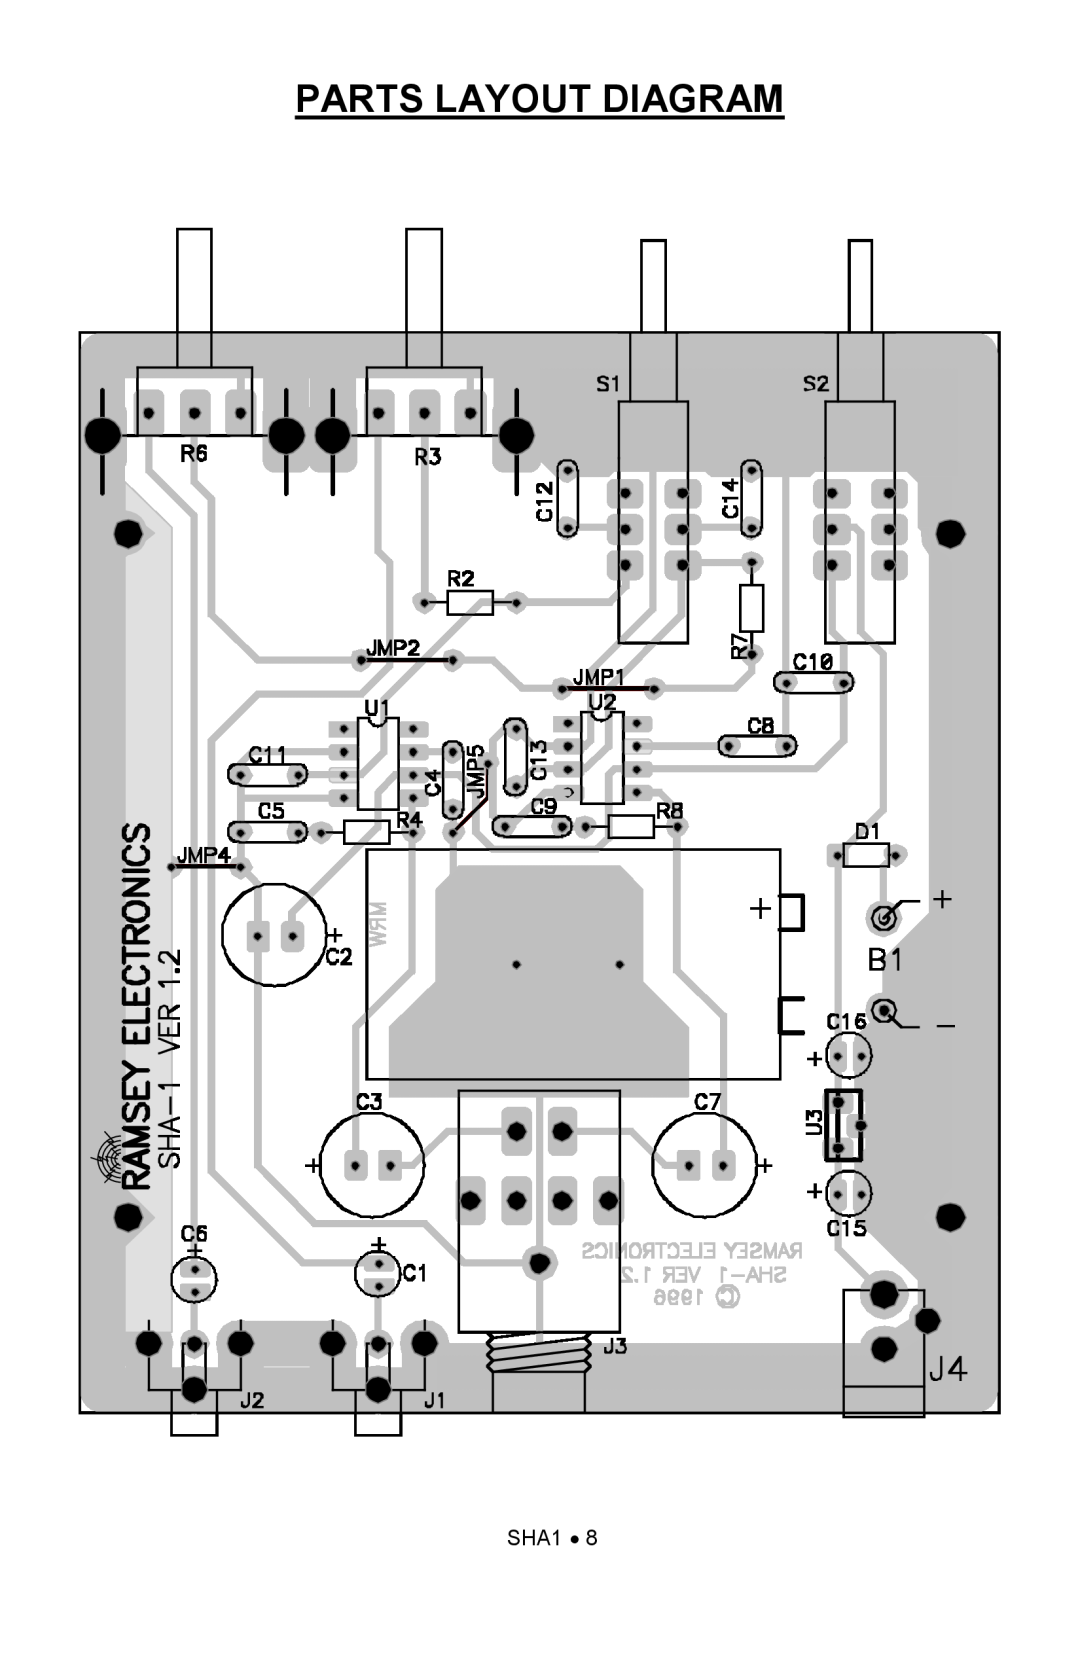 Ramsey Electronics SHA1 manual Parts Layout Diagram 